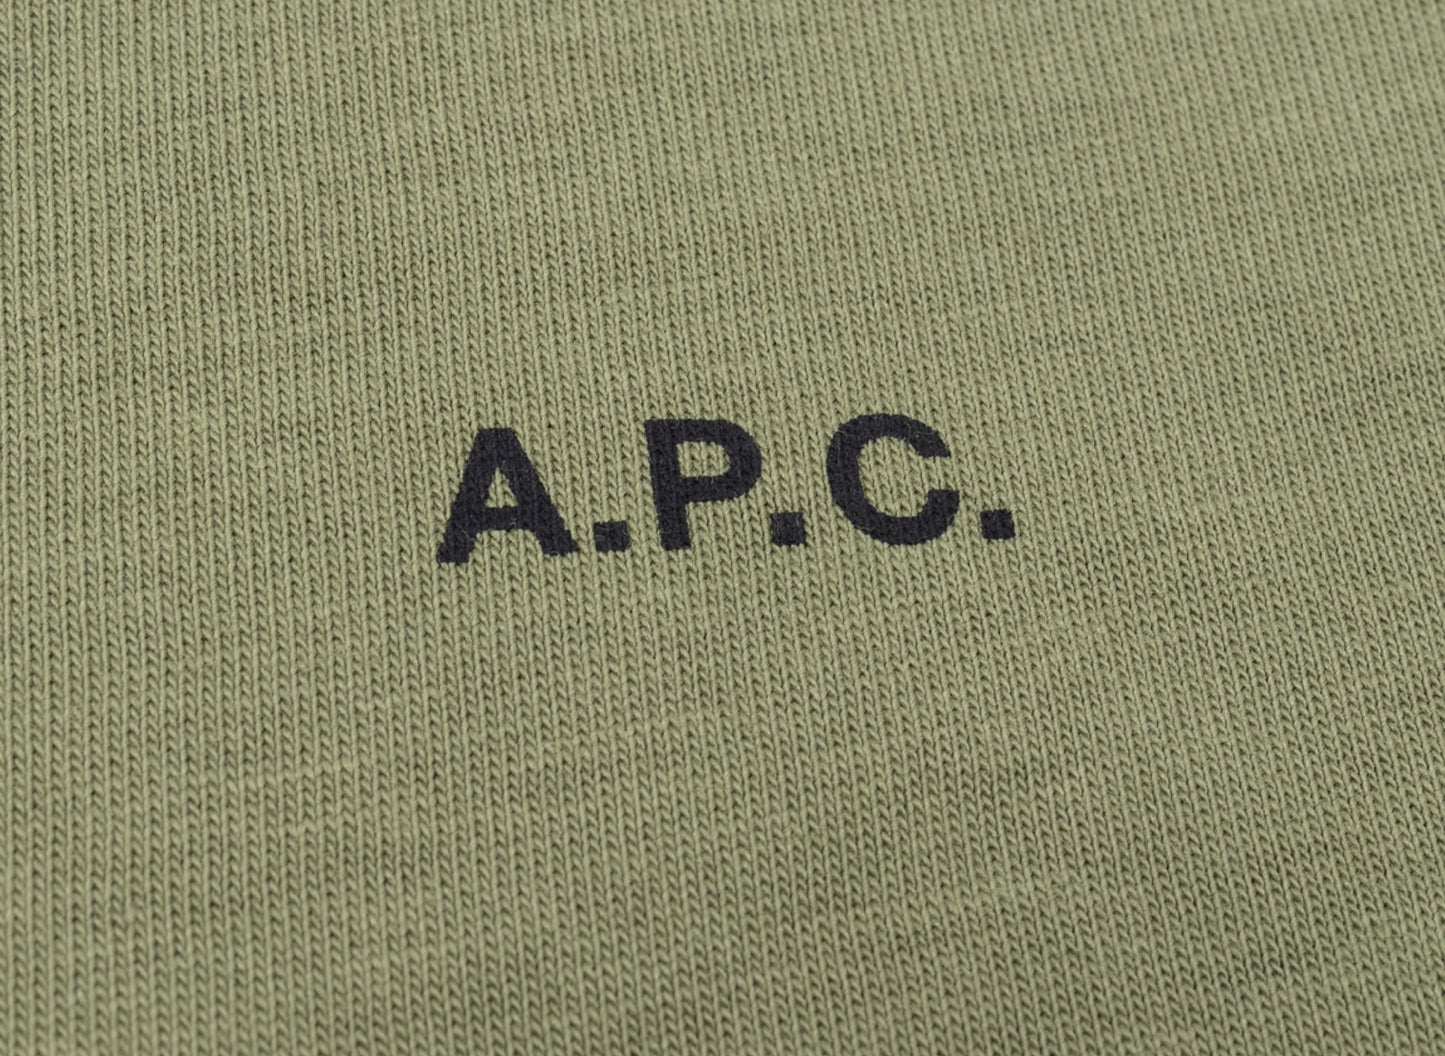 A.P.C. Kyle T-Shirt in Khaki